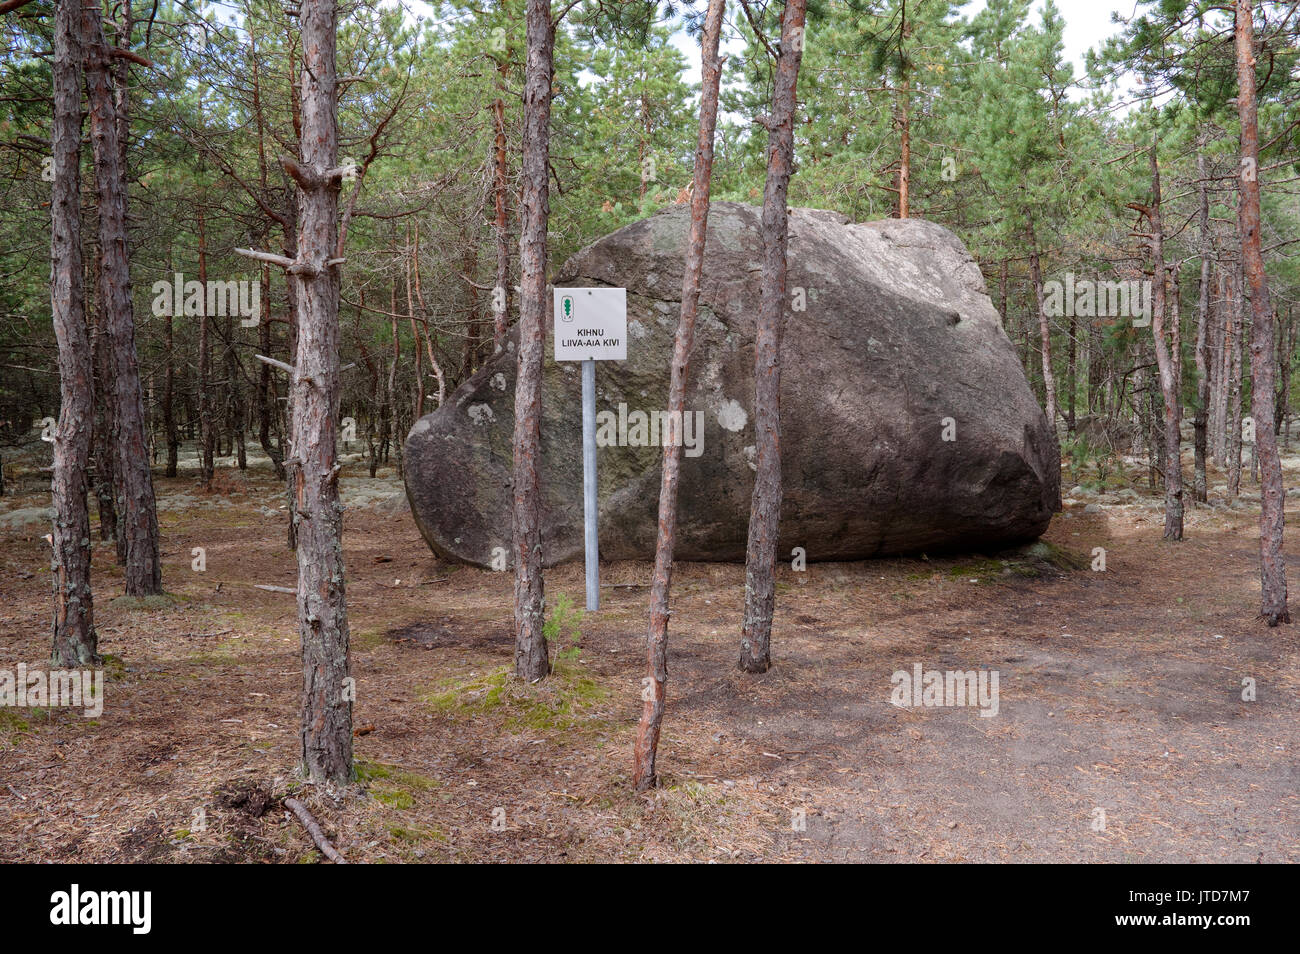 Boulder denominato Liiva-aia kivi nel villaggio Linaküla. Kihnu isola. Estonia 5 Agosto 2017 Foto Stock